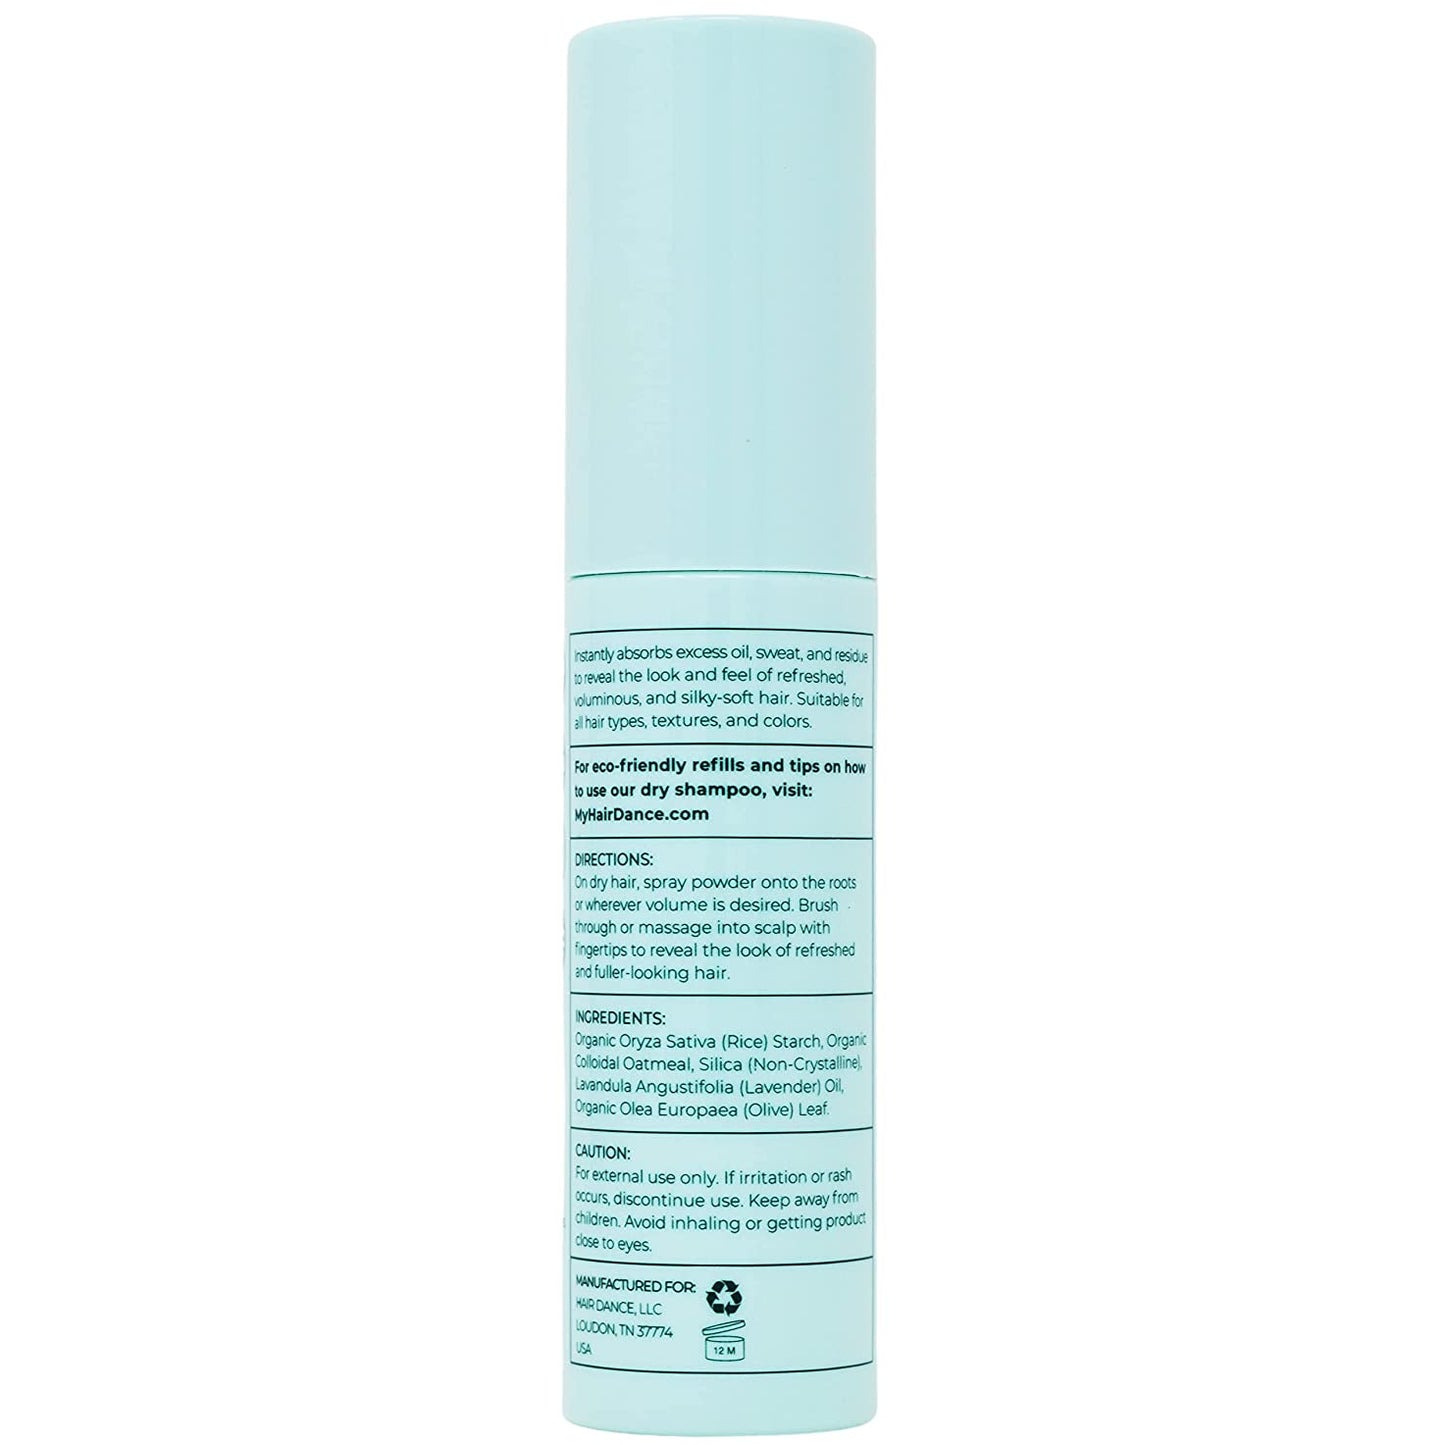 NEW Dry Shampoo Powder | Non-Aerosol, Organic Ingredients, Refillable Bottle, Volumizing Spray Applicator in Lavender - 0.8 oz